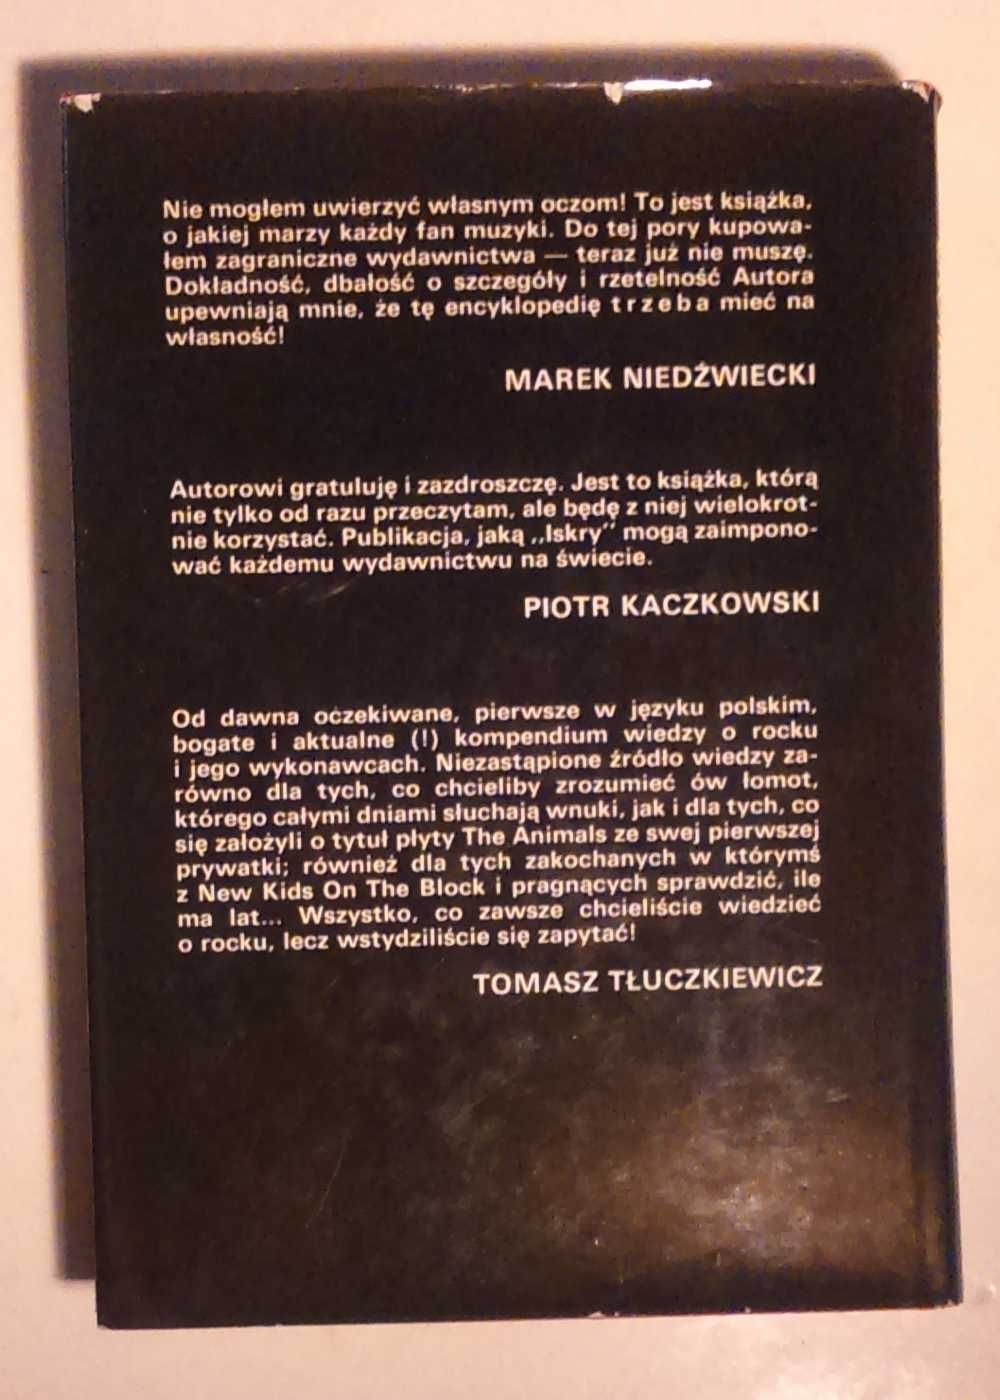 Rock Encyklopedia - Wiesław Weiss 1991